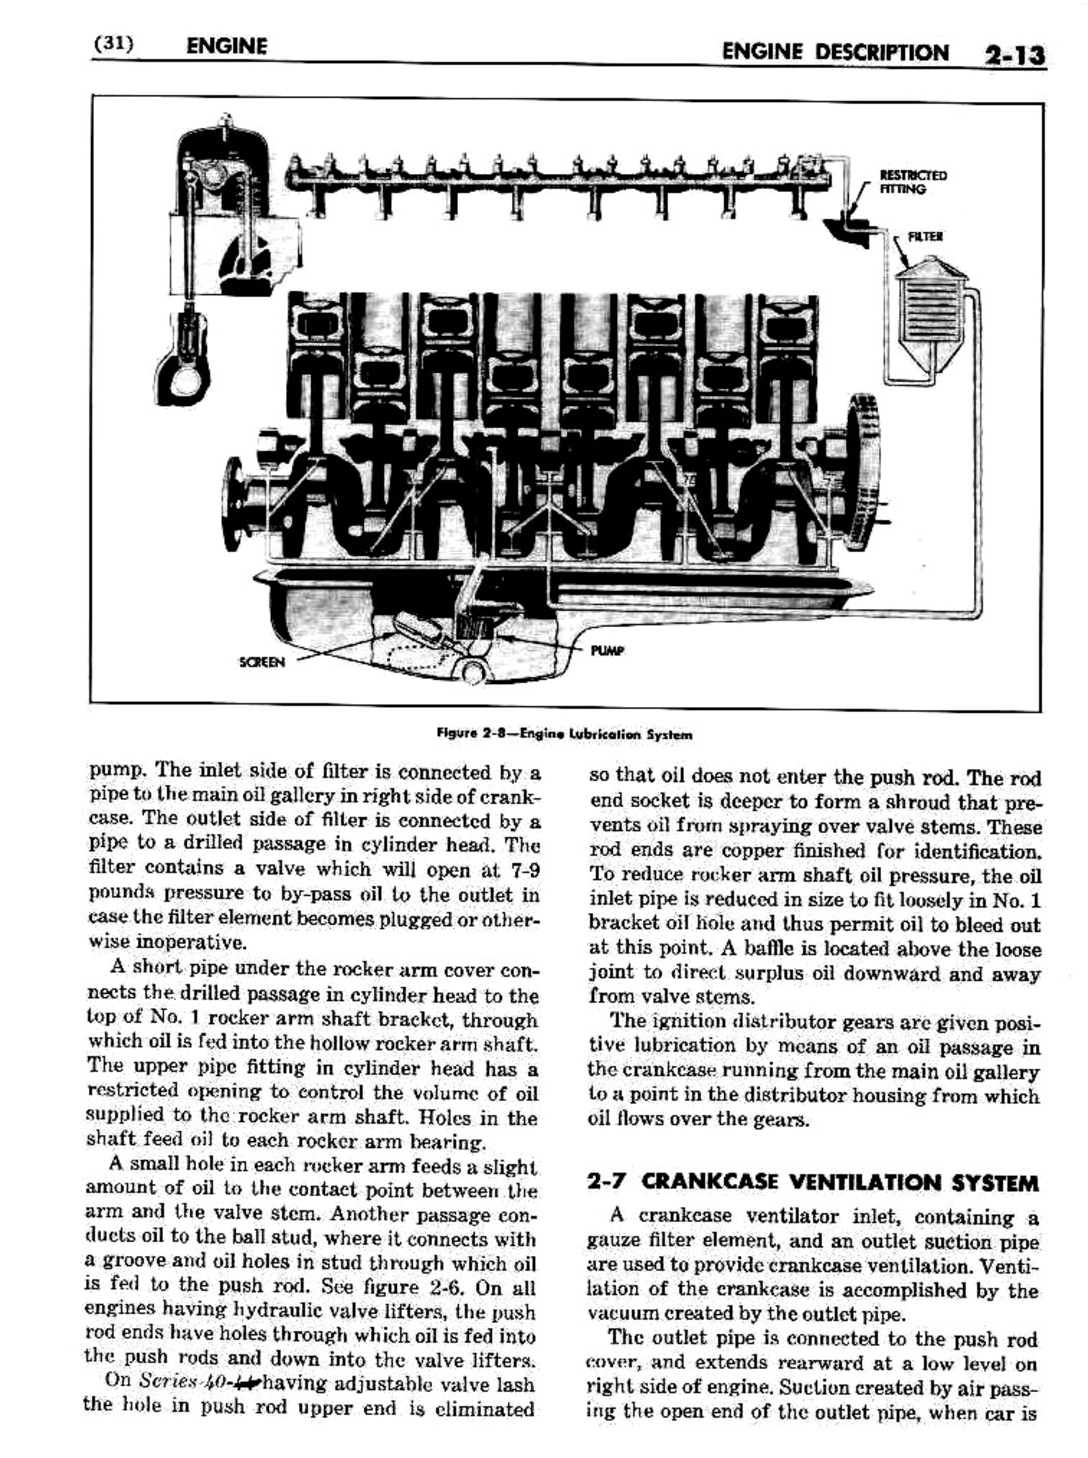 n_03 1951 Buick Shop Manual - Engine-013-013.jpg